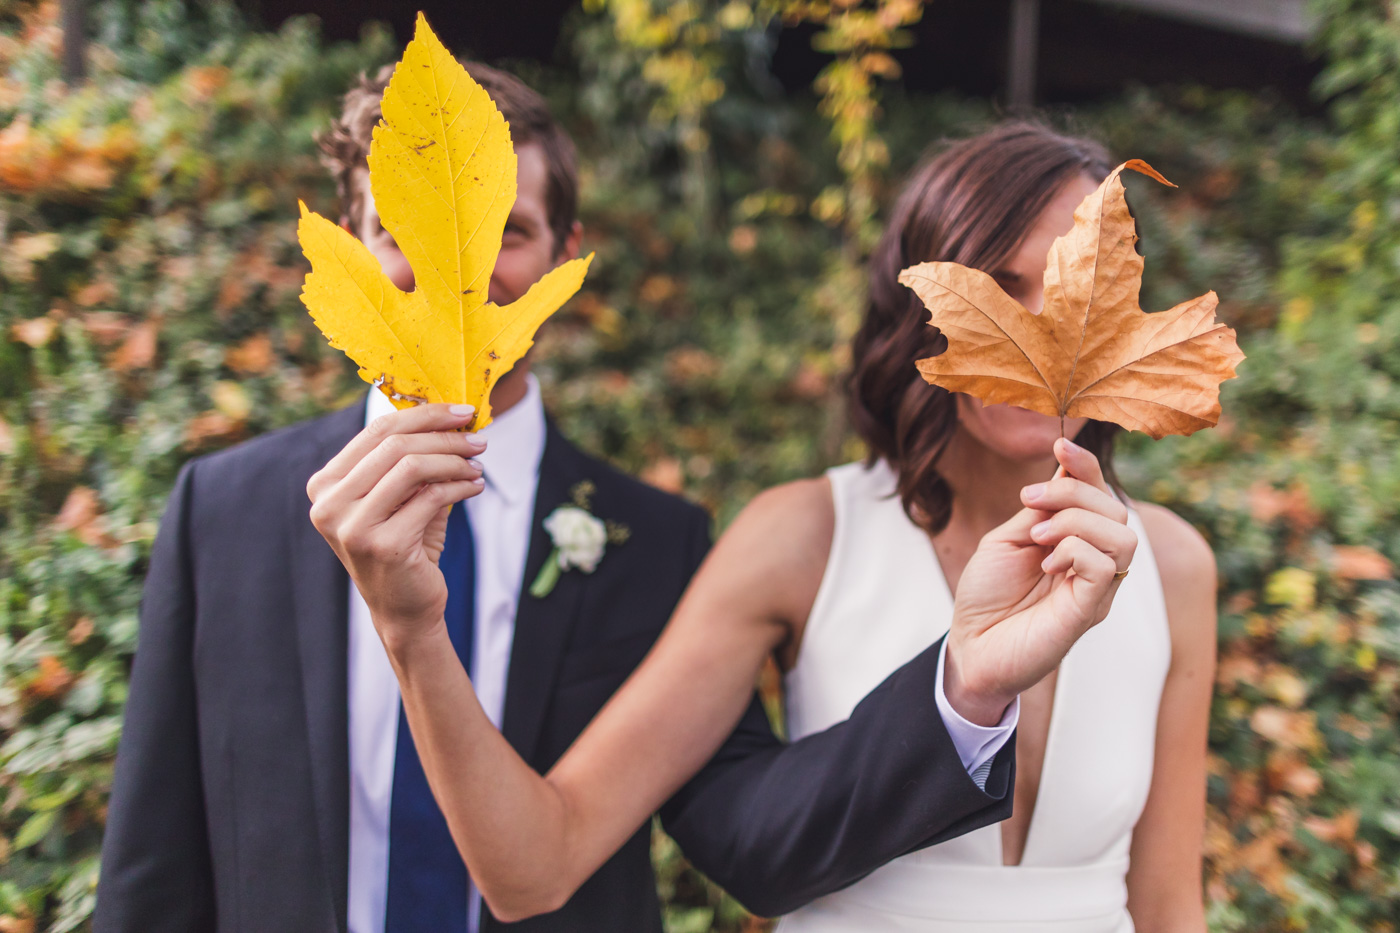 fun-silly-wedding-photo-leaves